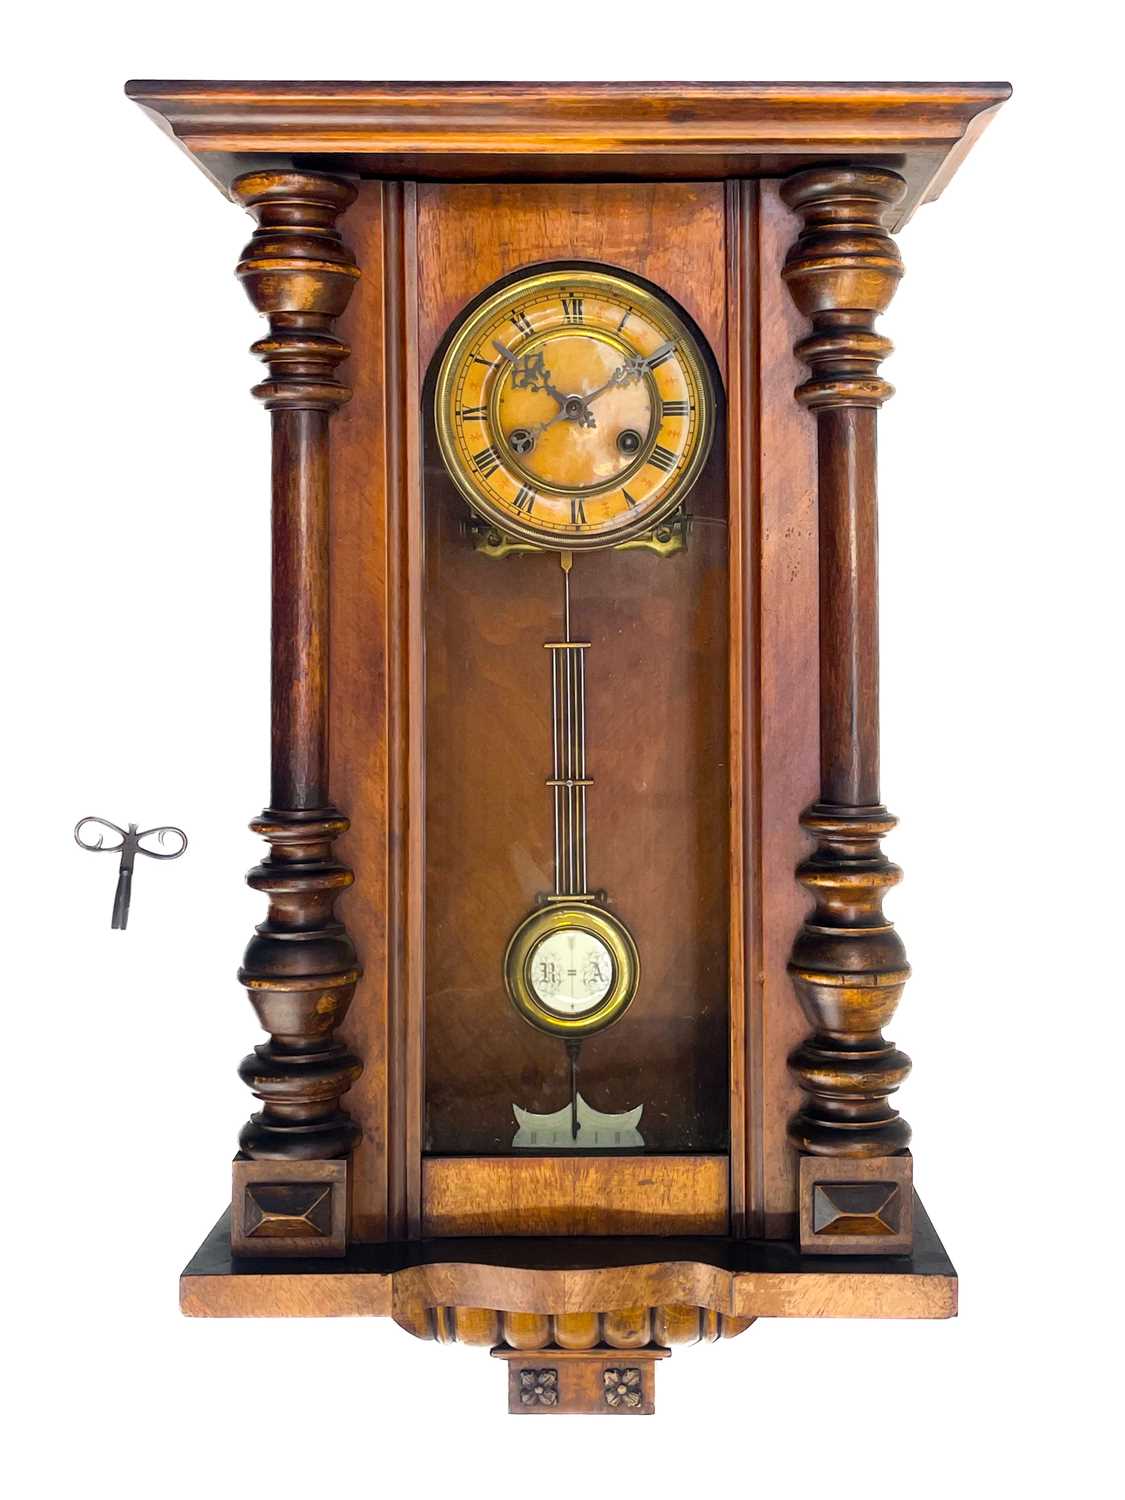 A German Kienzle walnut cased wall clock.